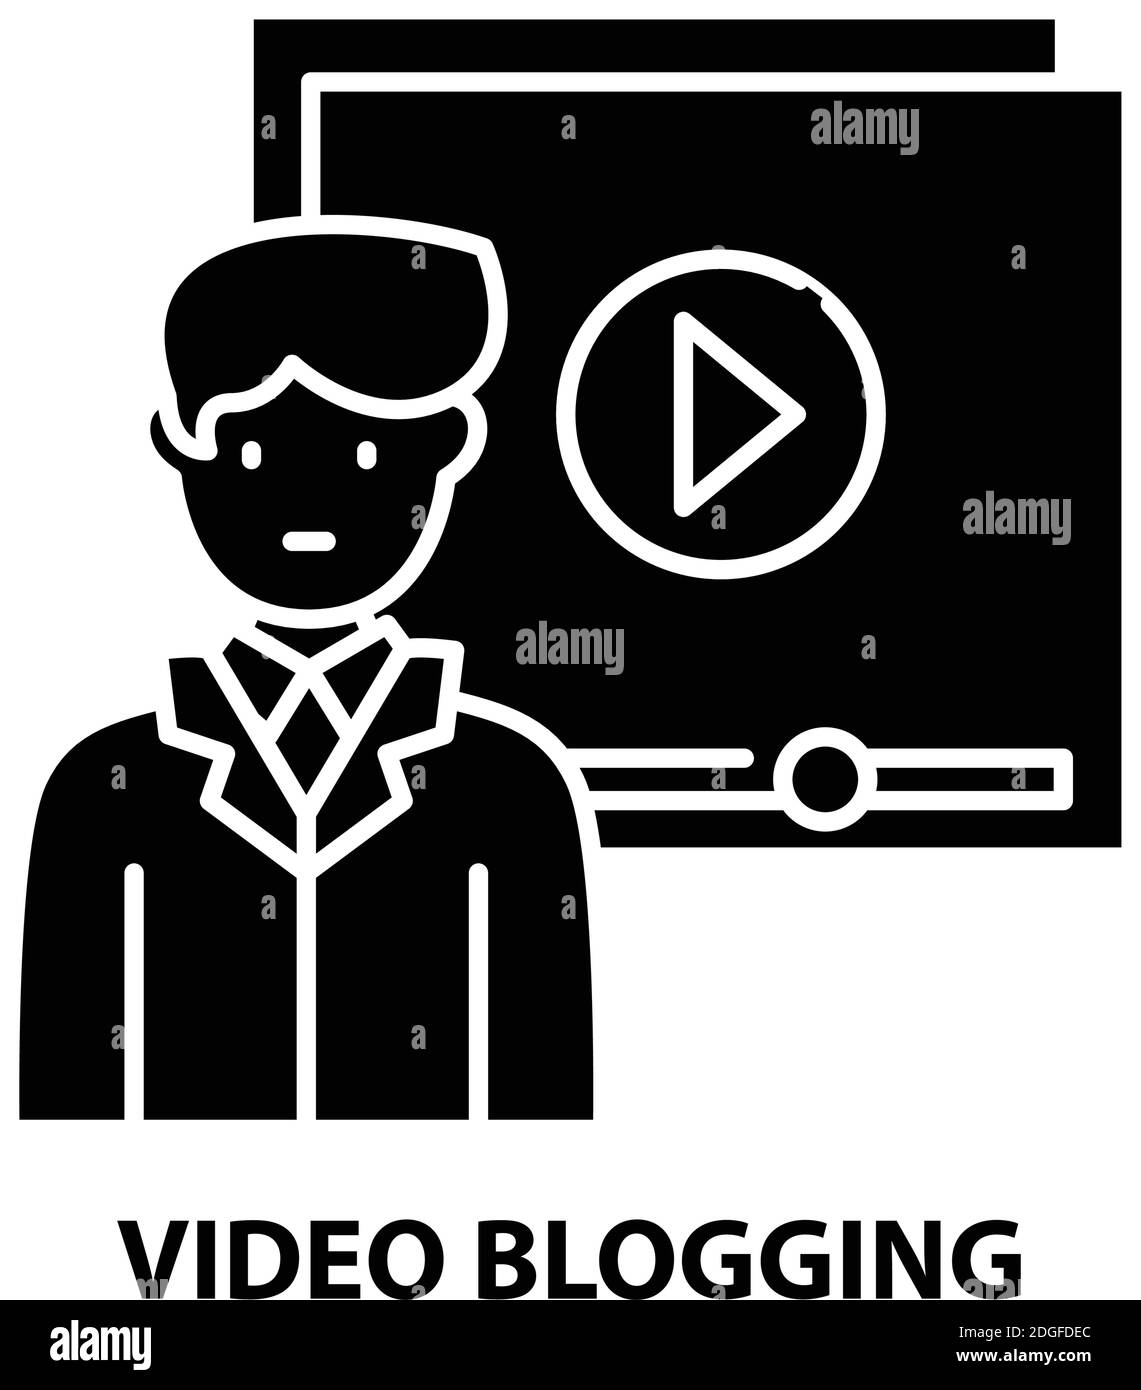 video blogging icon, black vector sign with editable strokes, concept illustration Stock Vector